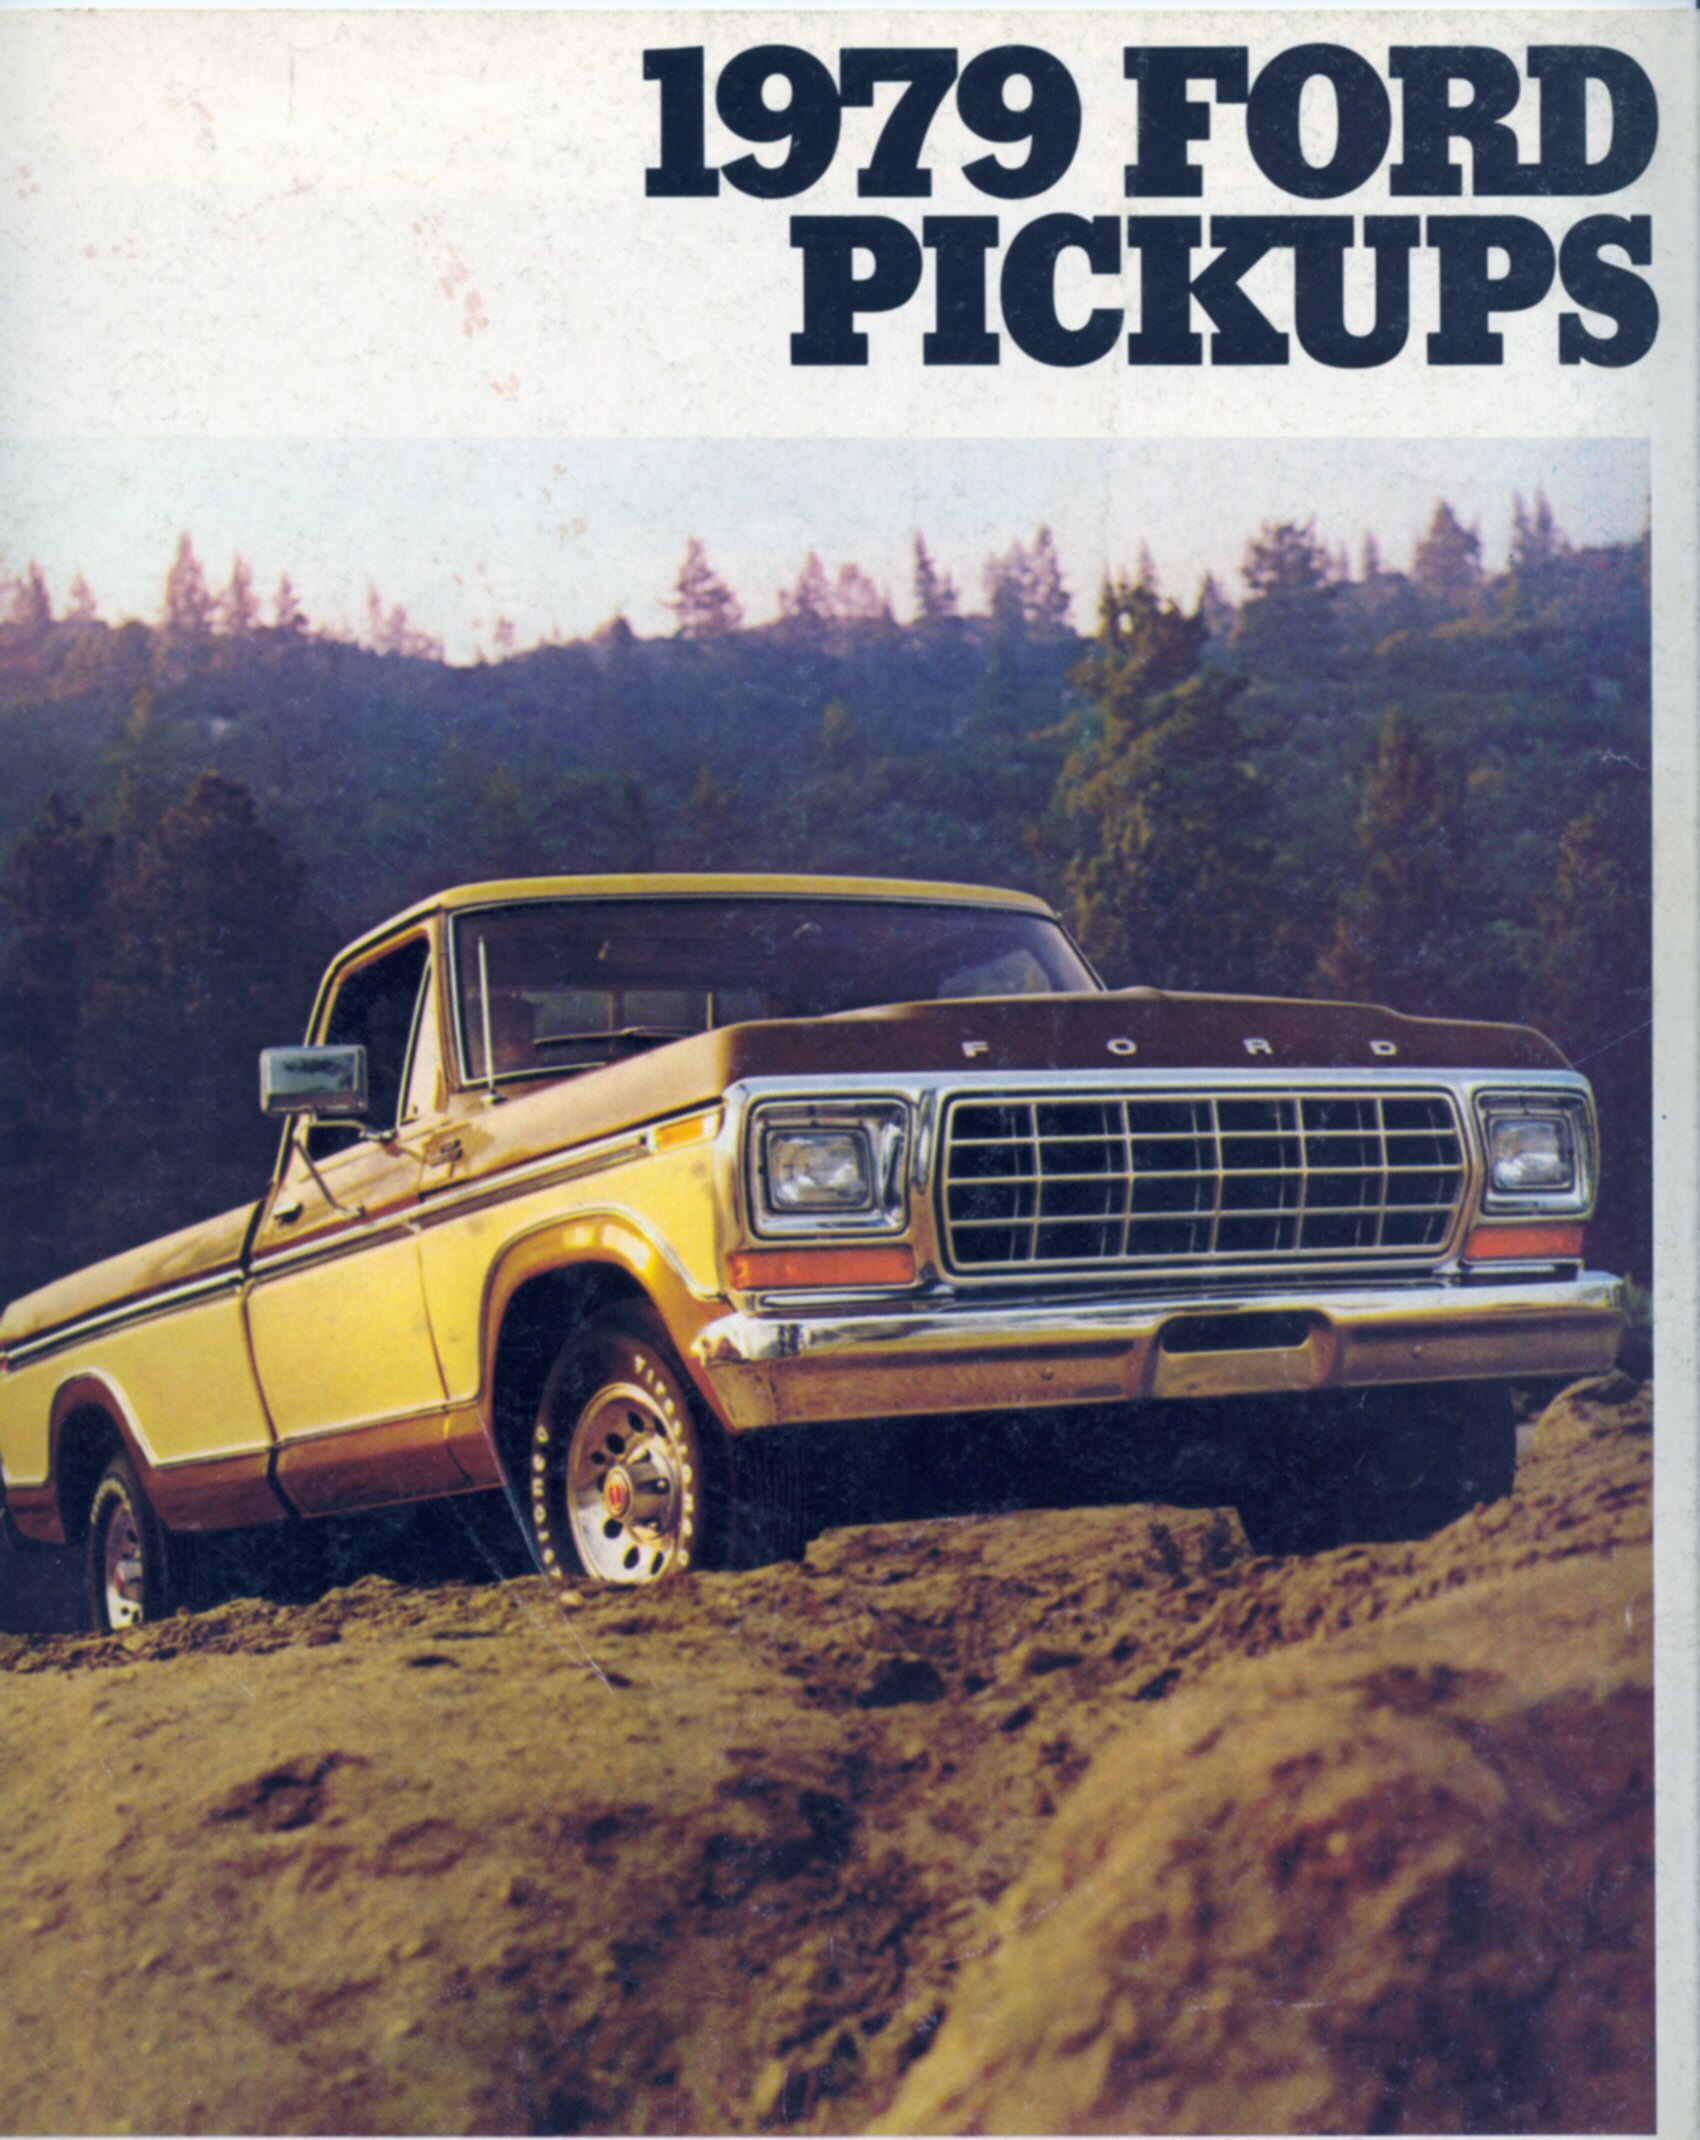 1979 Ford truck shop manual pdf #3